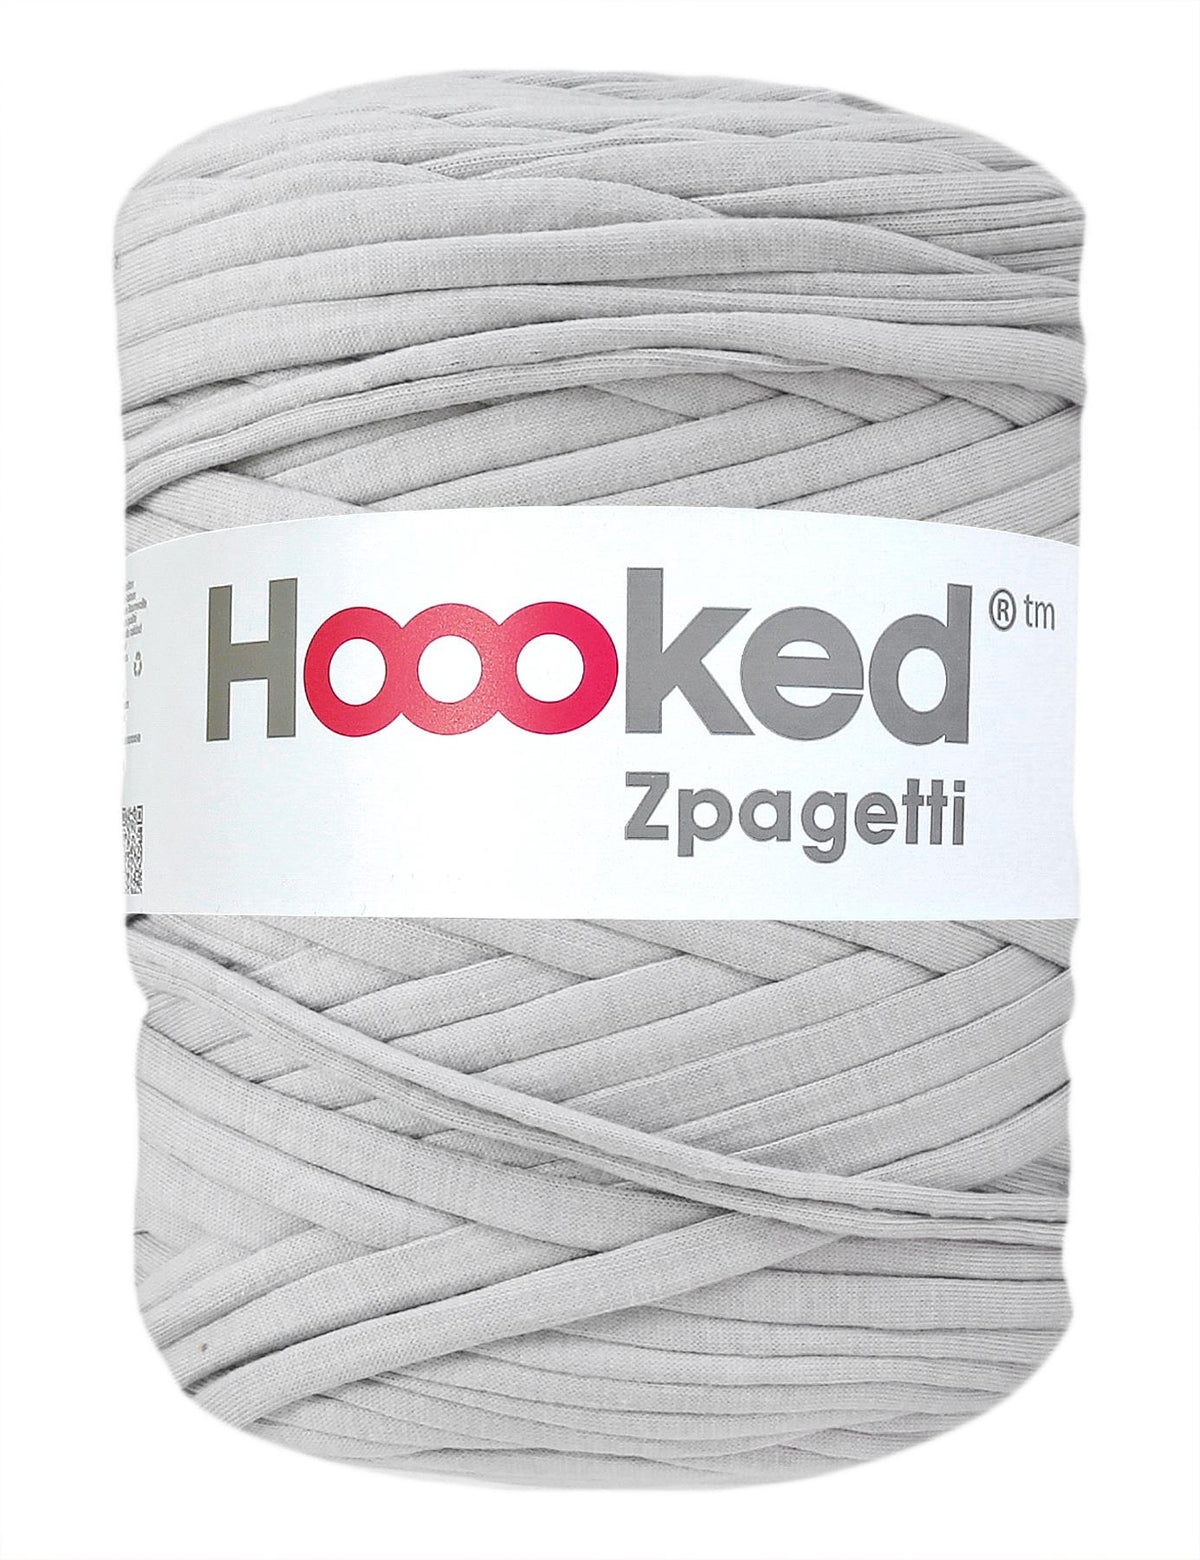 Rhino grey t-shirt yarn by Hoooked Zpagetti (100-120m)